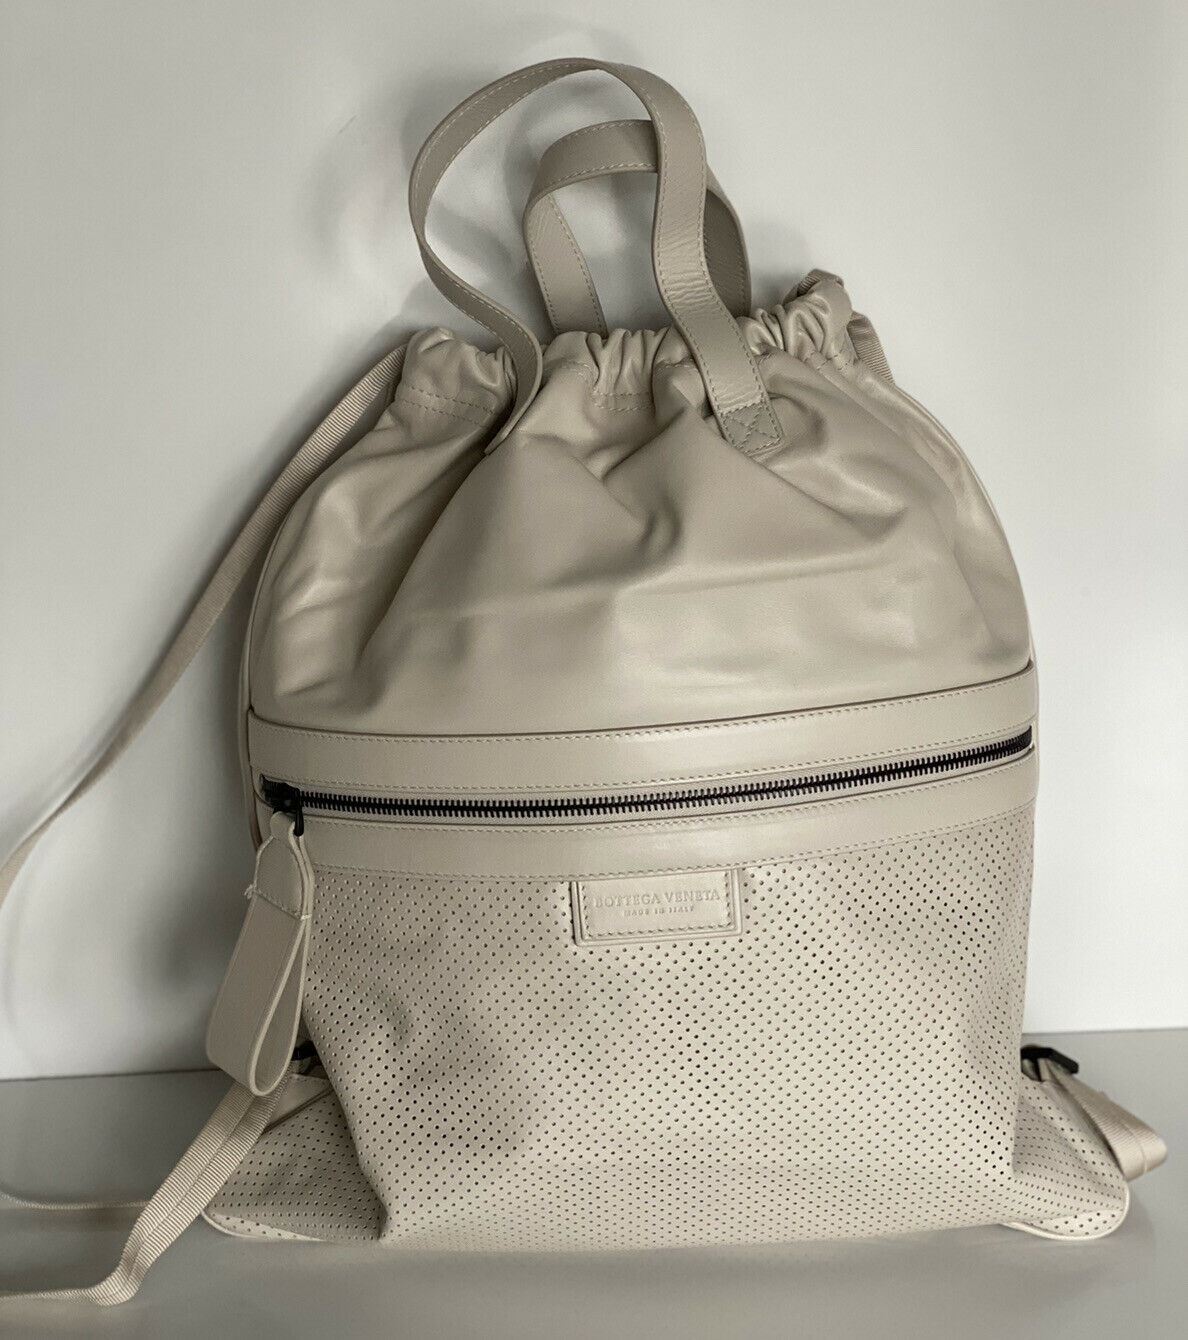 NWT $1980 Bottega Veneta Leather Backpack White Made in Italy 567222